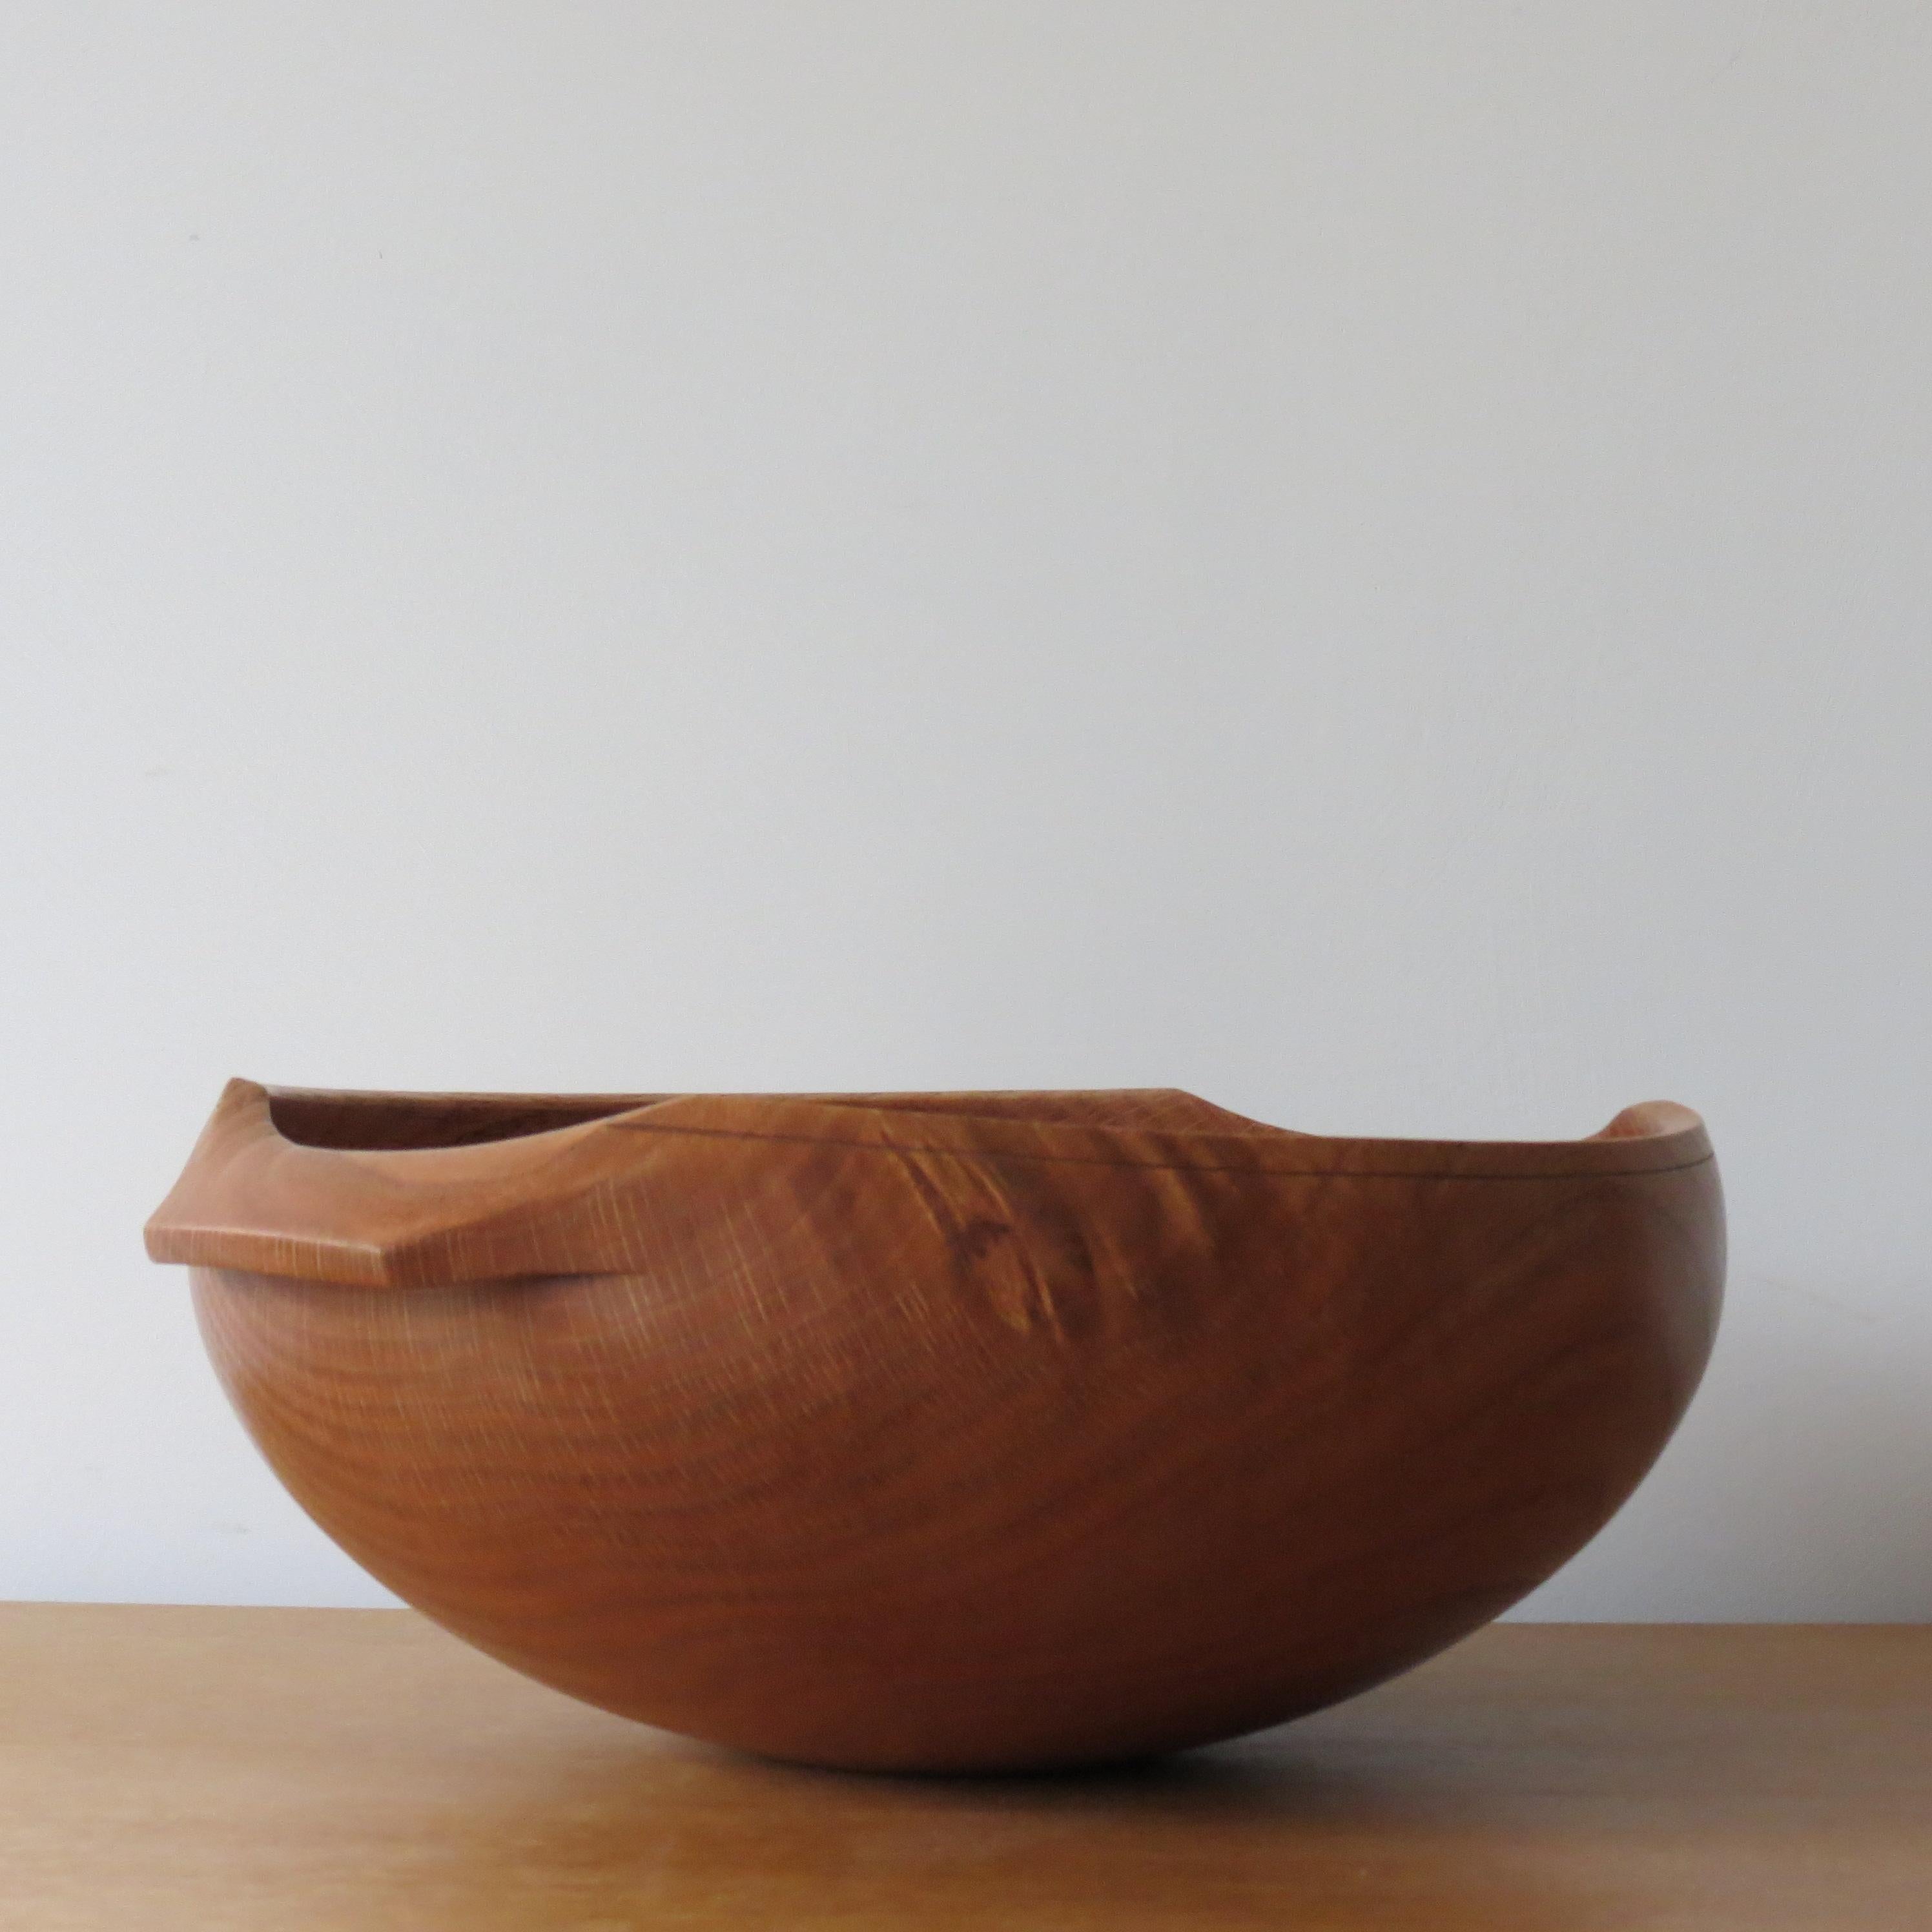 European Vintage Large Hand Turned Oak Wooden Bowl With Sculptural Handles